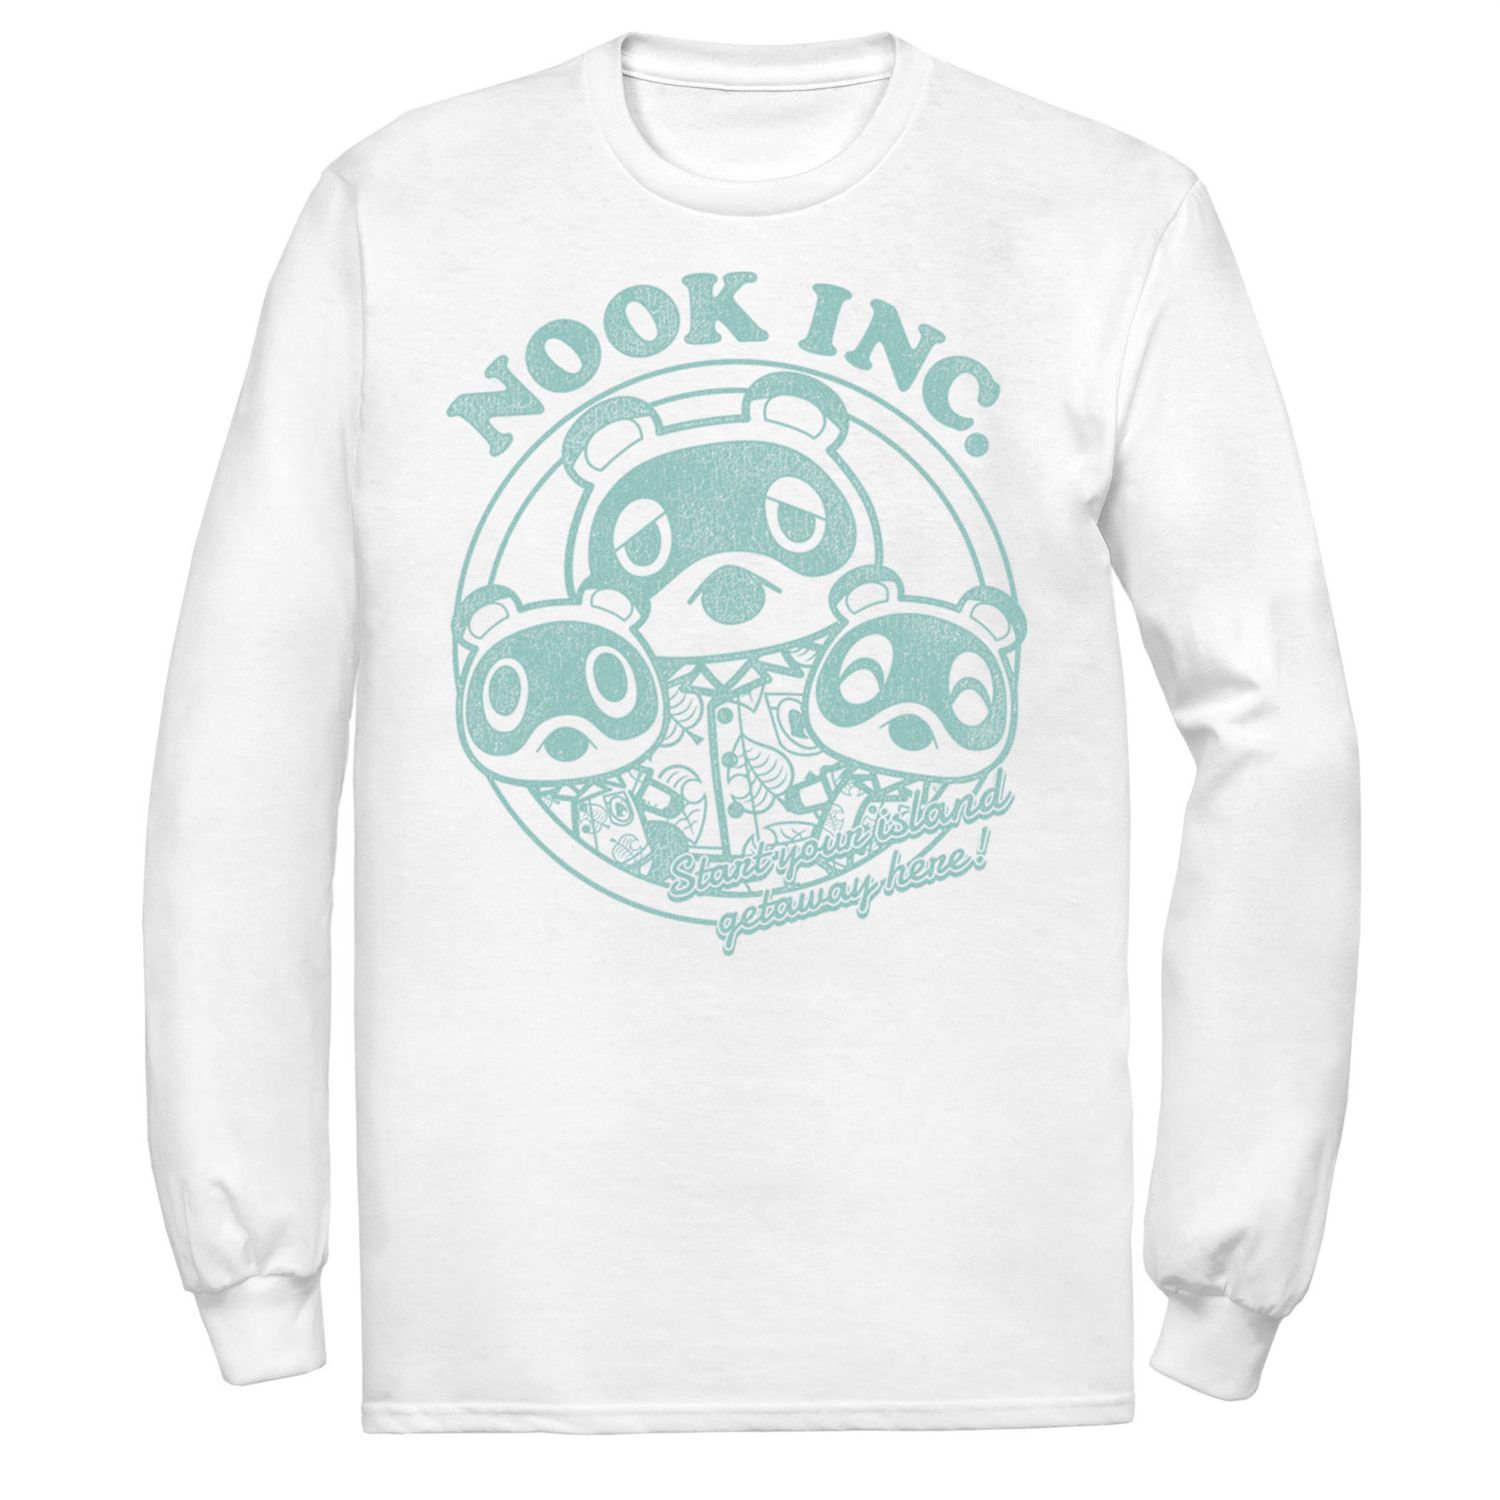 Мужская футболка Animal Crossing: New Horizons Nook Inc.Island Getaway Licensed Character